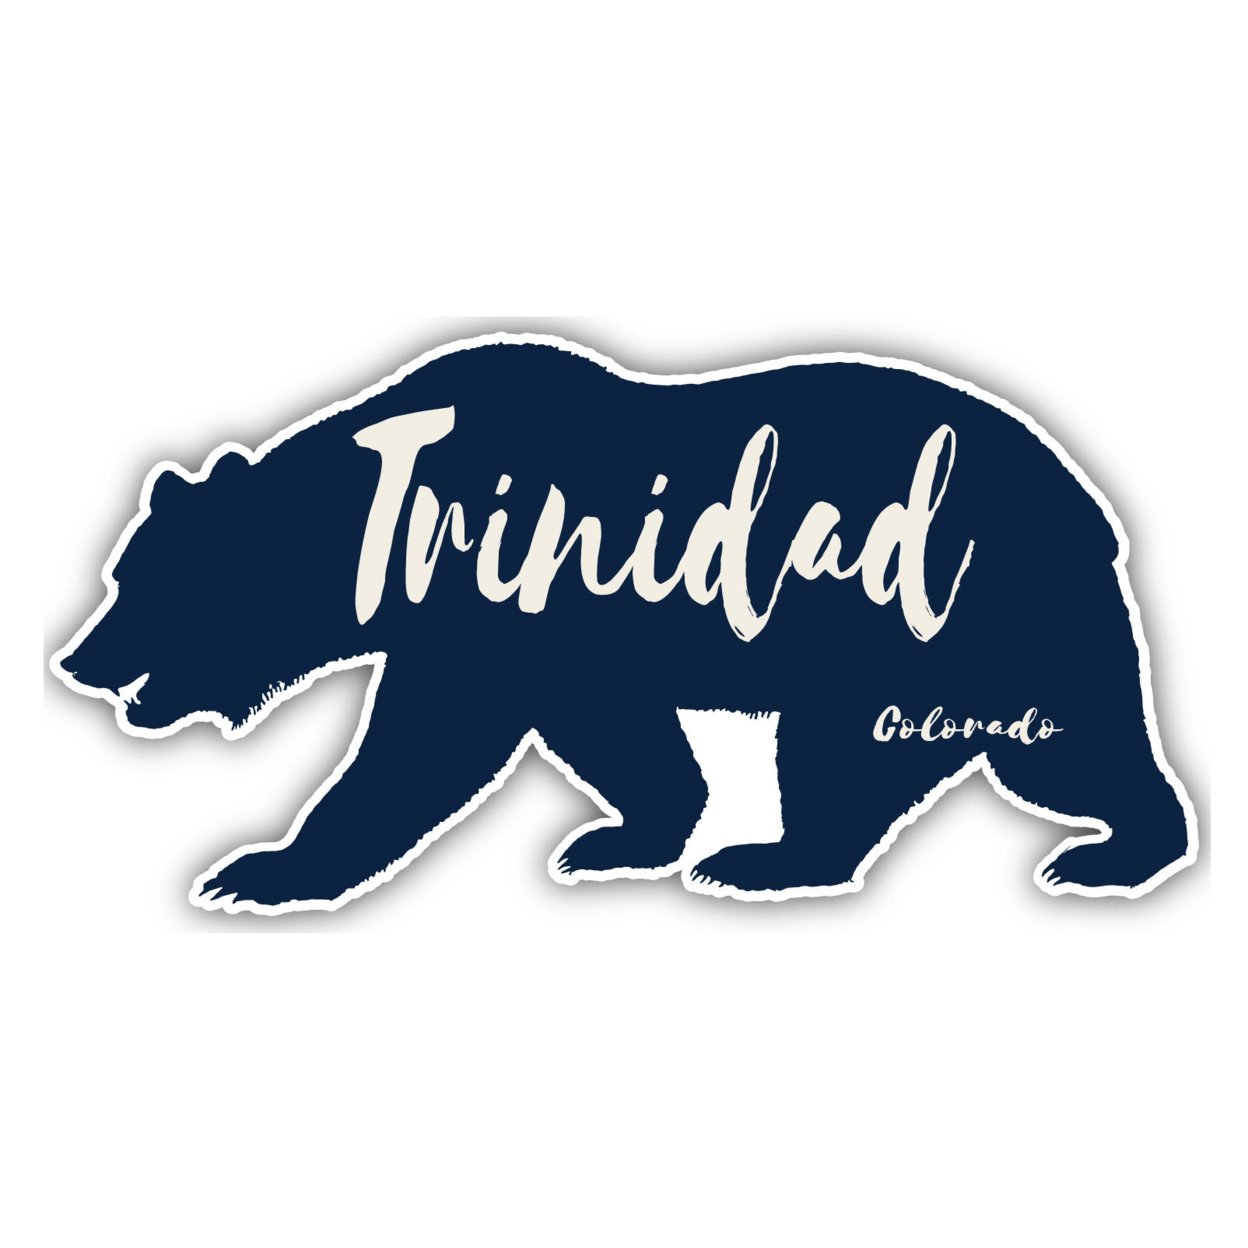 Trinidad Colorado Souvenir Decorative Stickers (Choose Theme And Size) - Single Unit, 2-Inch, Tent